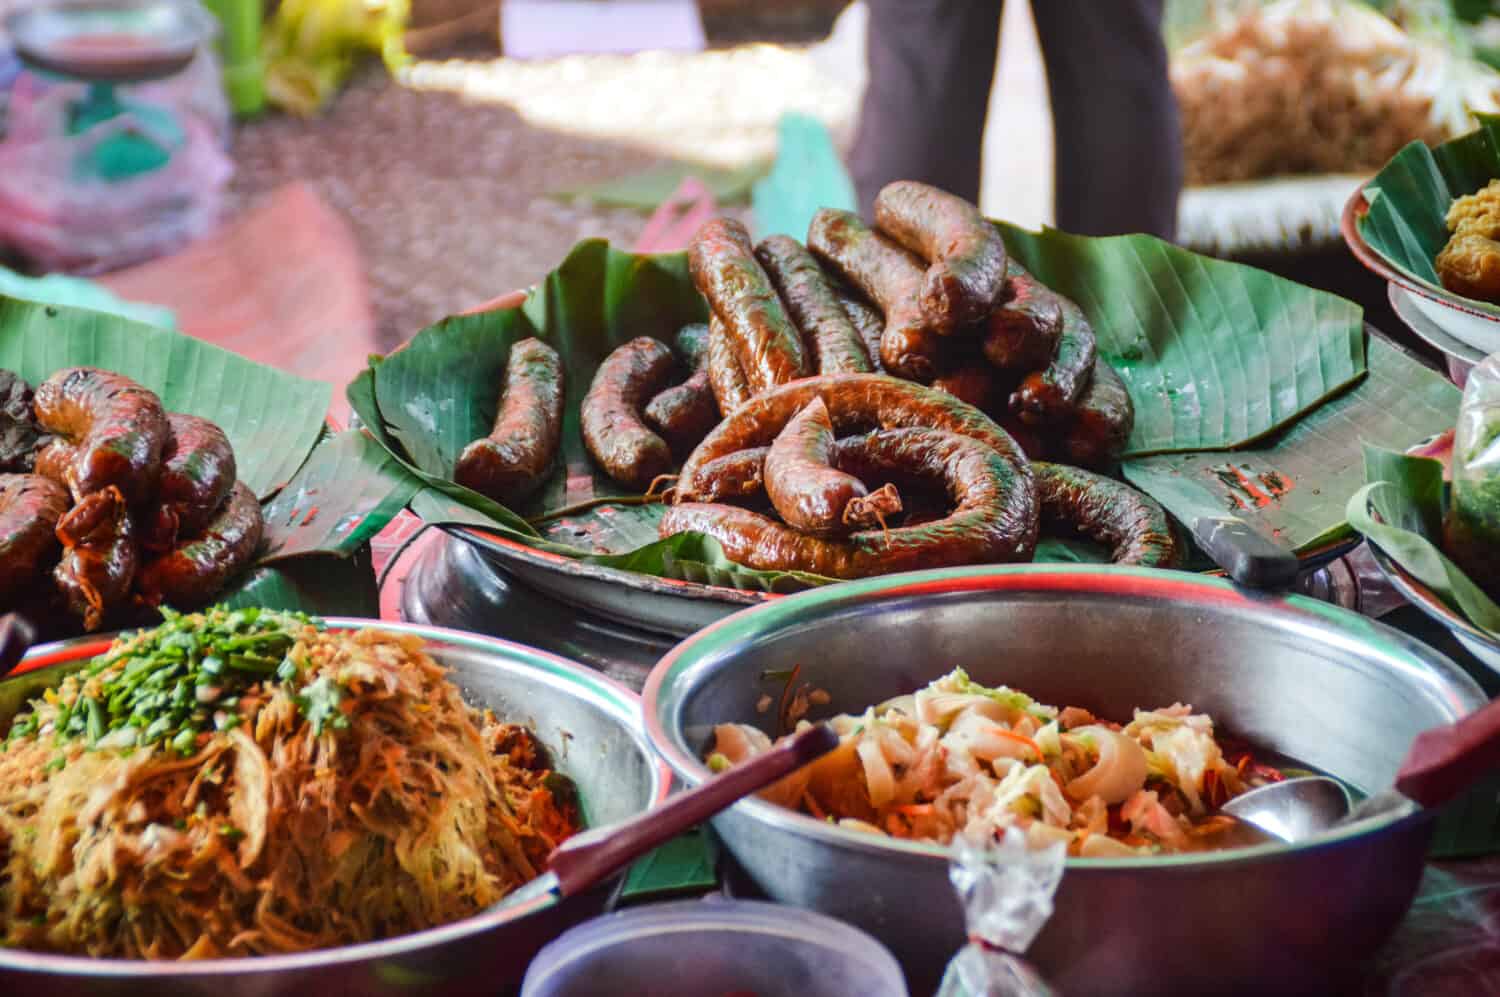 Street foods on the famous morning market in Luang Prabang. Sai oua, Lao grilled pork sausage. Sai kok, chunky Lao pork sausage.